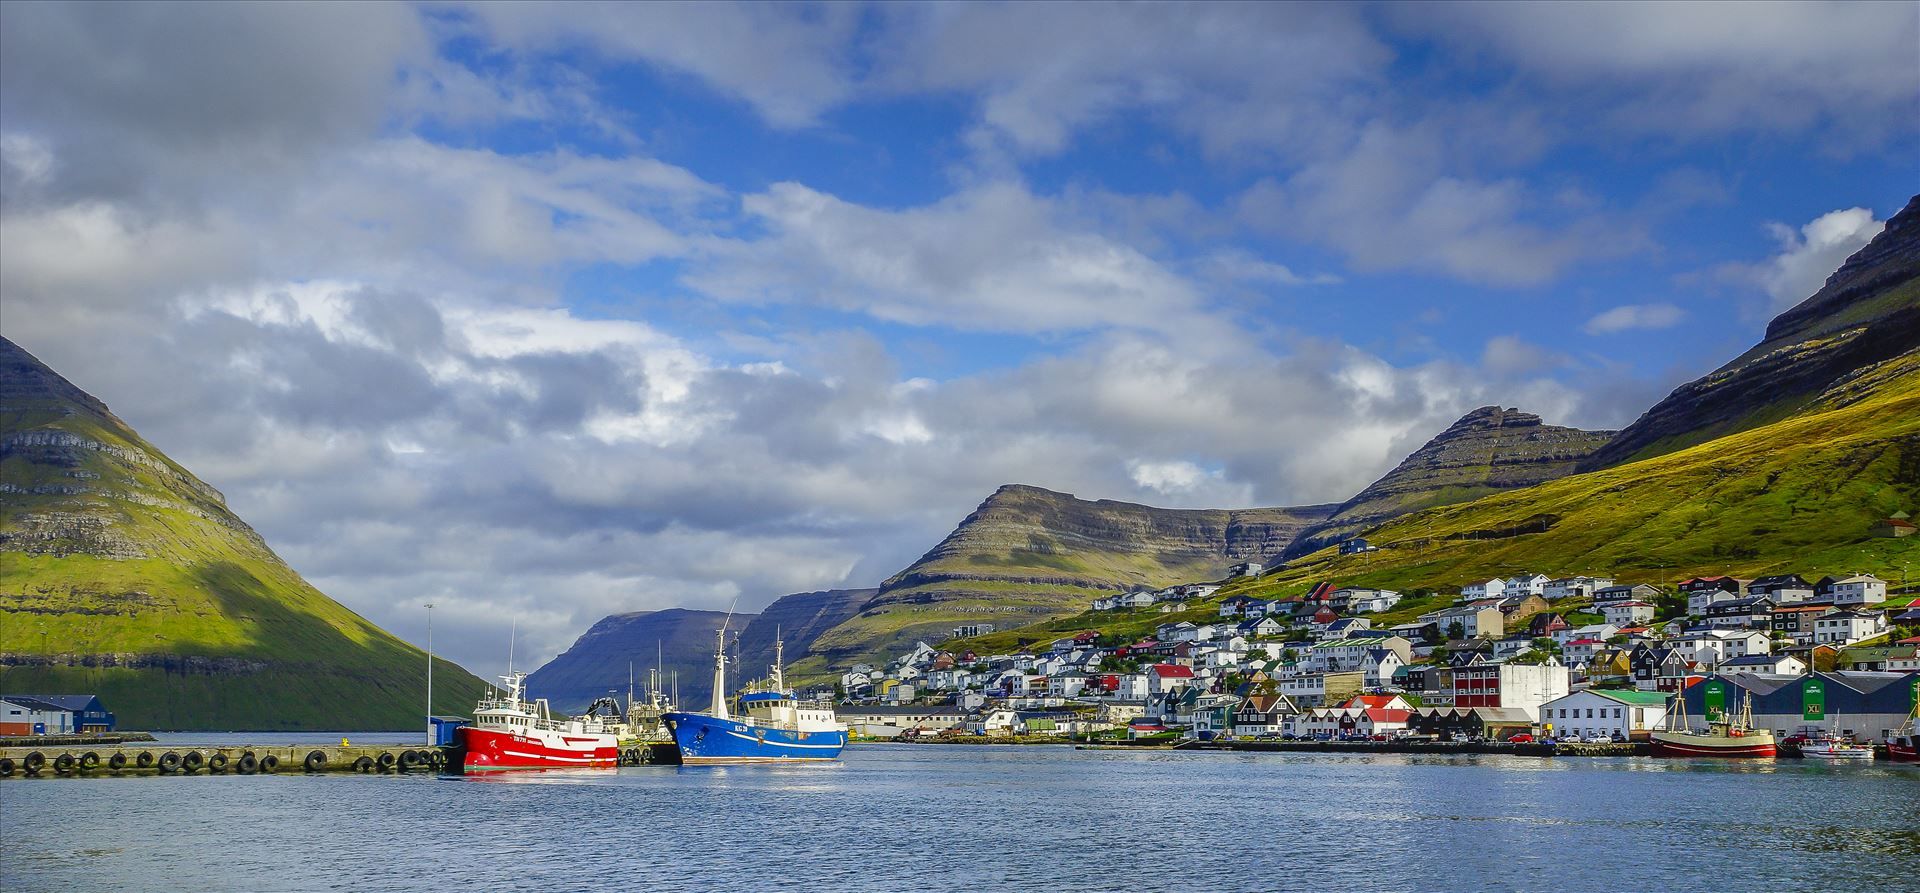 Klaksvik,Faroe Islands - Klaksvik Harbor by Buckmaster